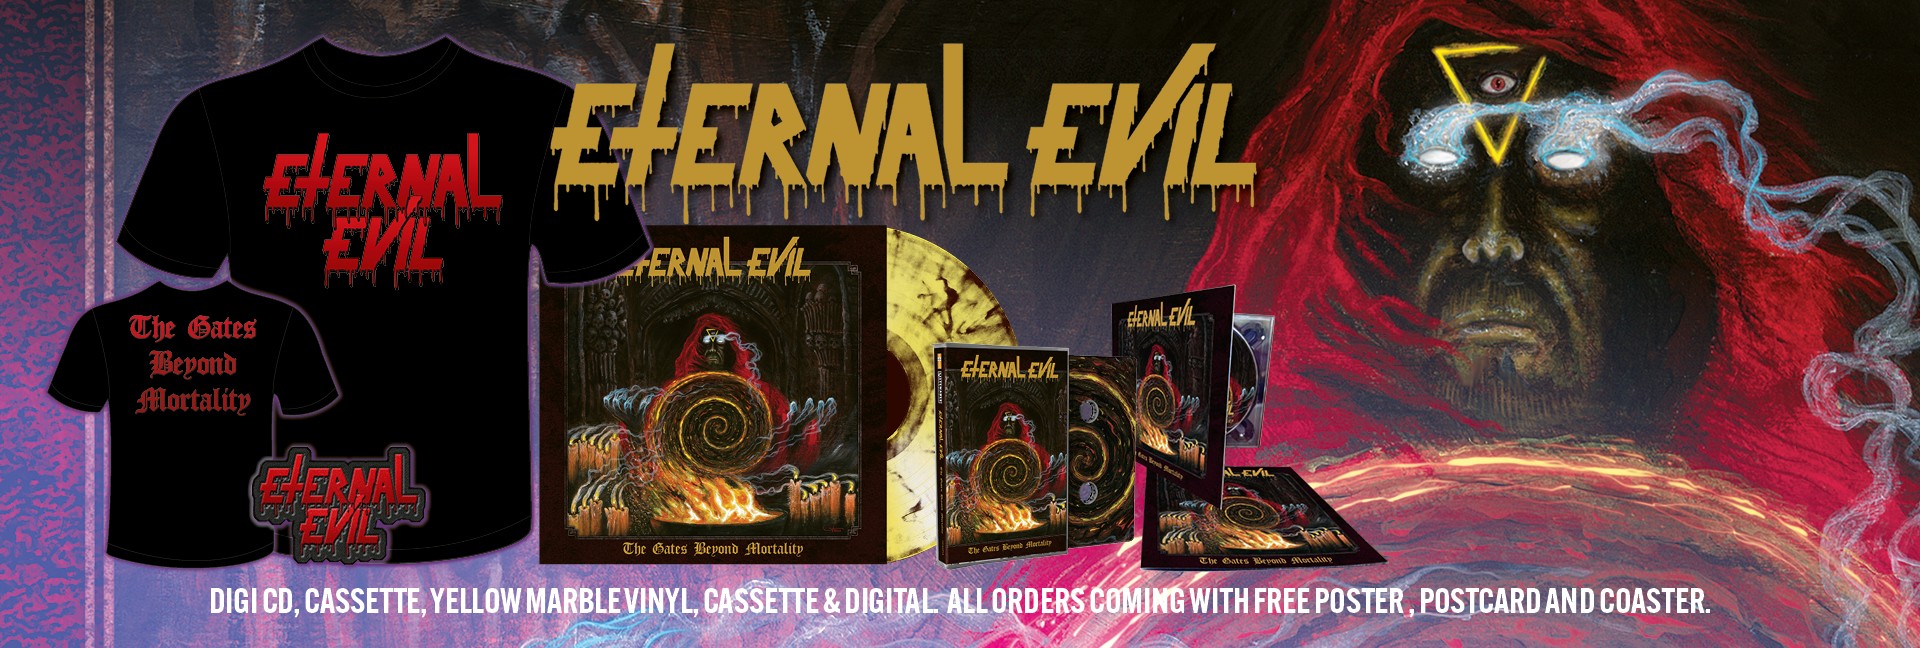 eternal evil